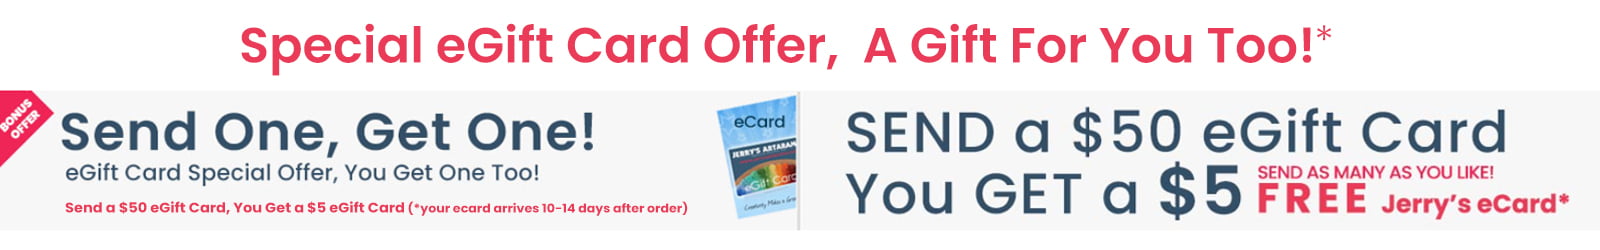 Send One Get One eCard Offer